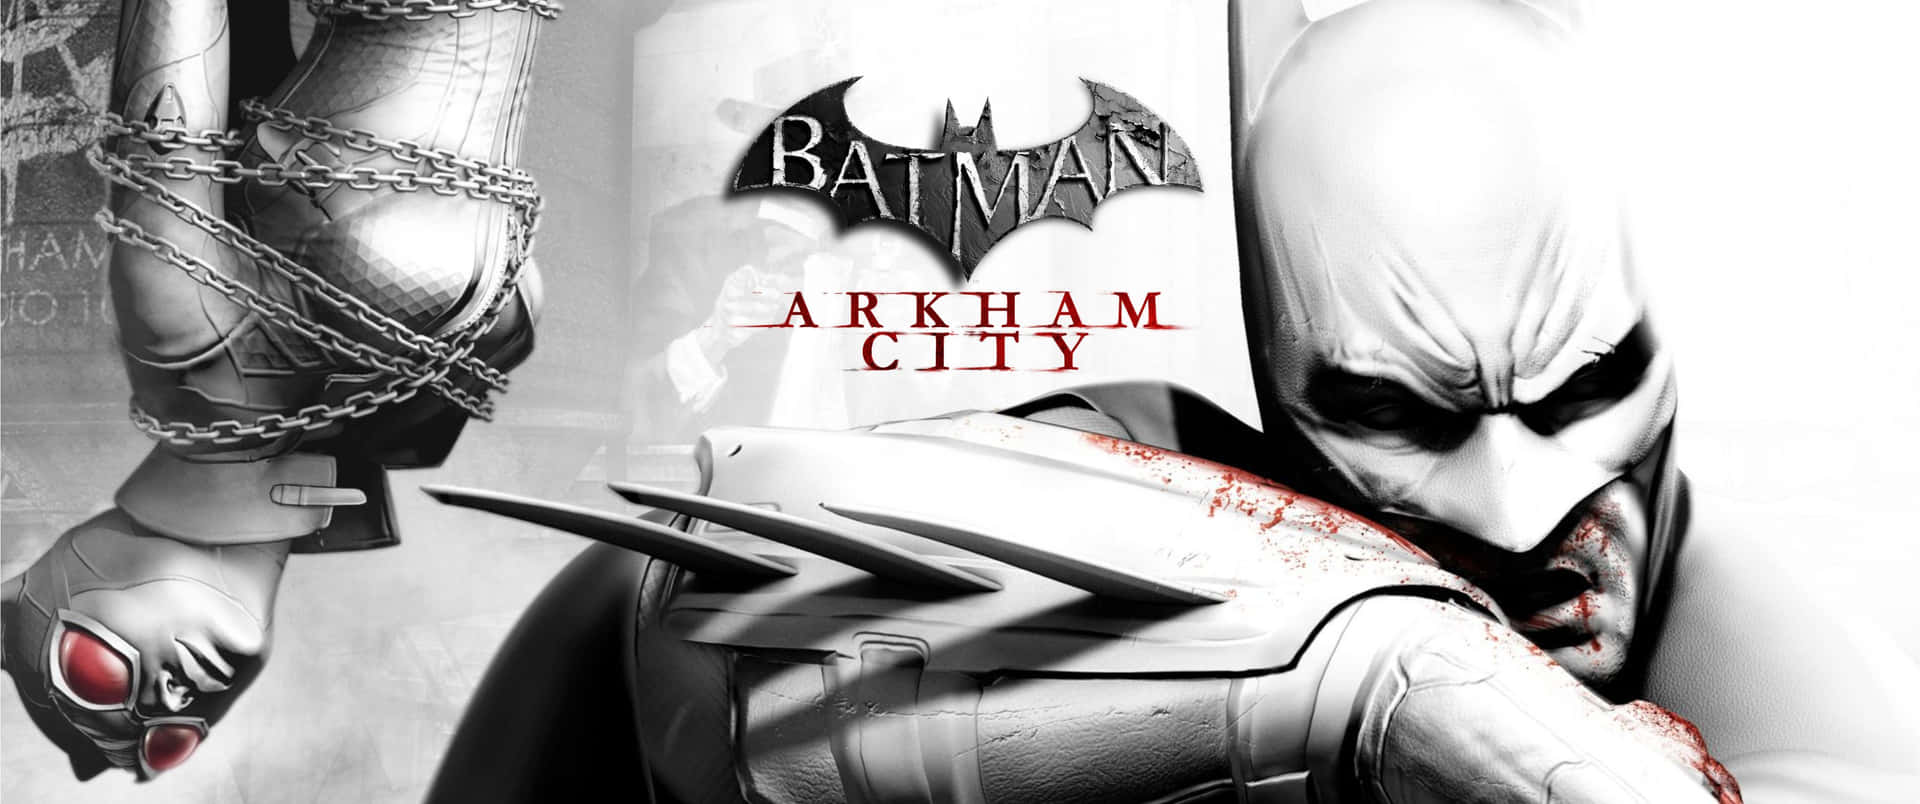 Protect Gotham City with the Dark Knight: Batman in Arkham City